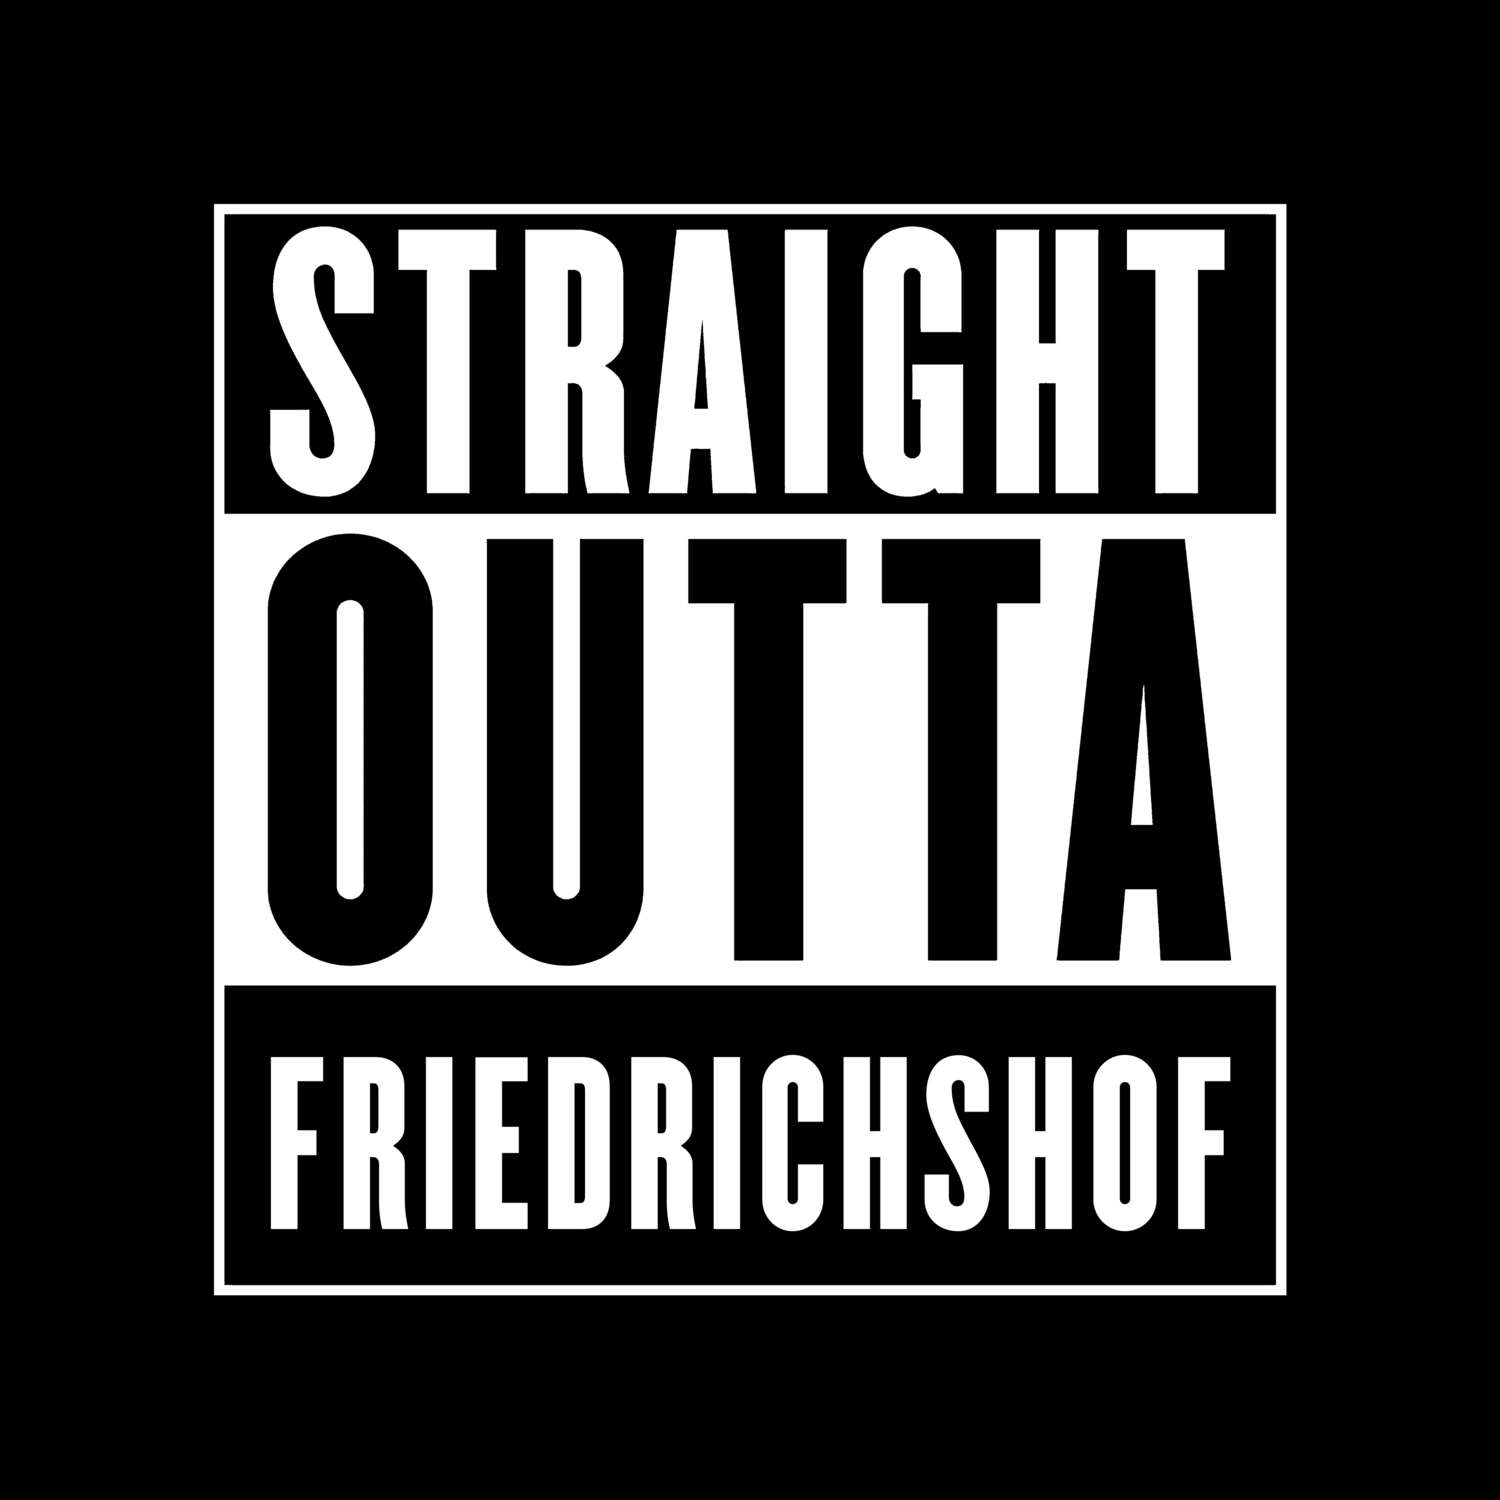 Friedrichshof T-Shirt »Straight Outta«